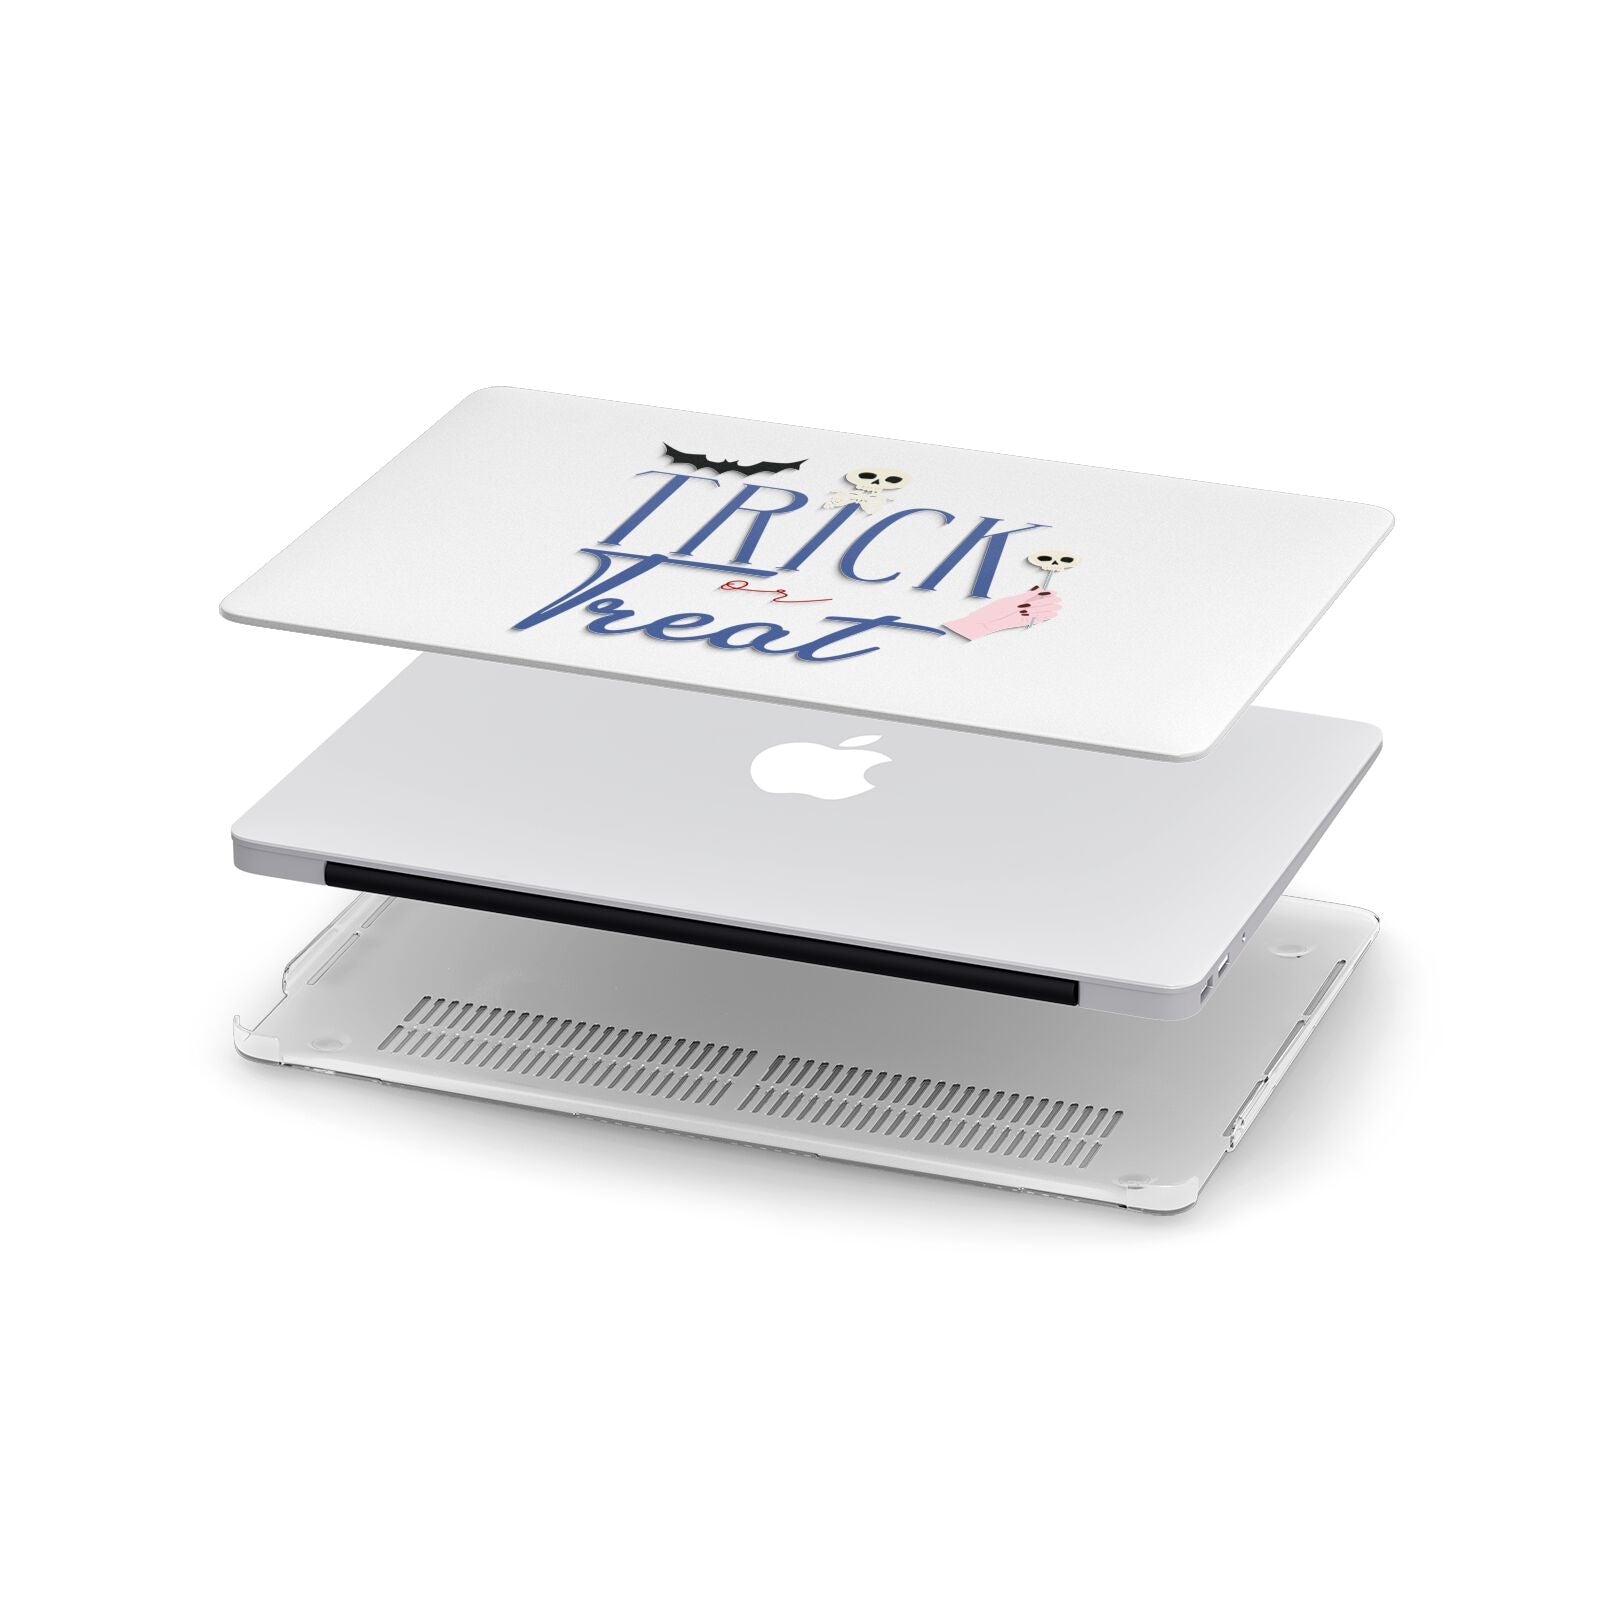 Blue Trick or Treat Apple MacBook Case in Detail